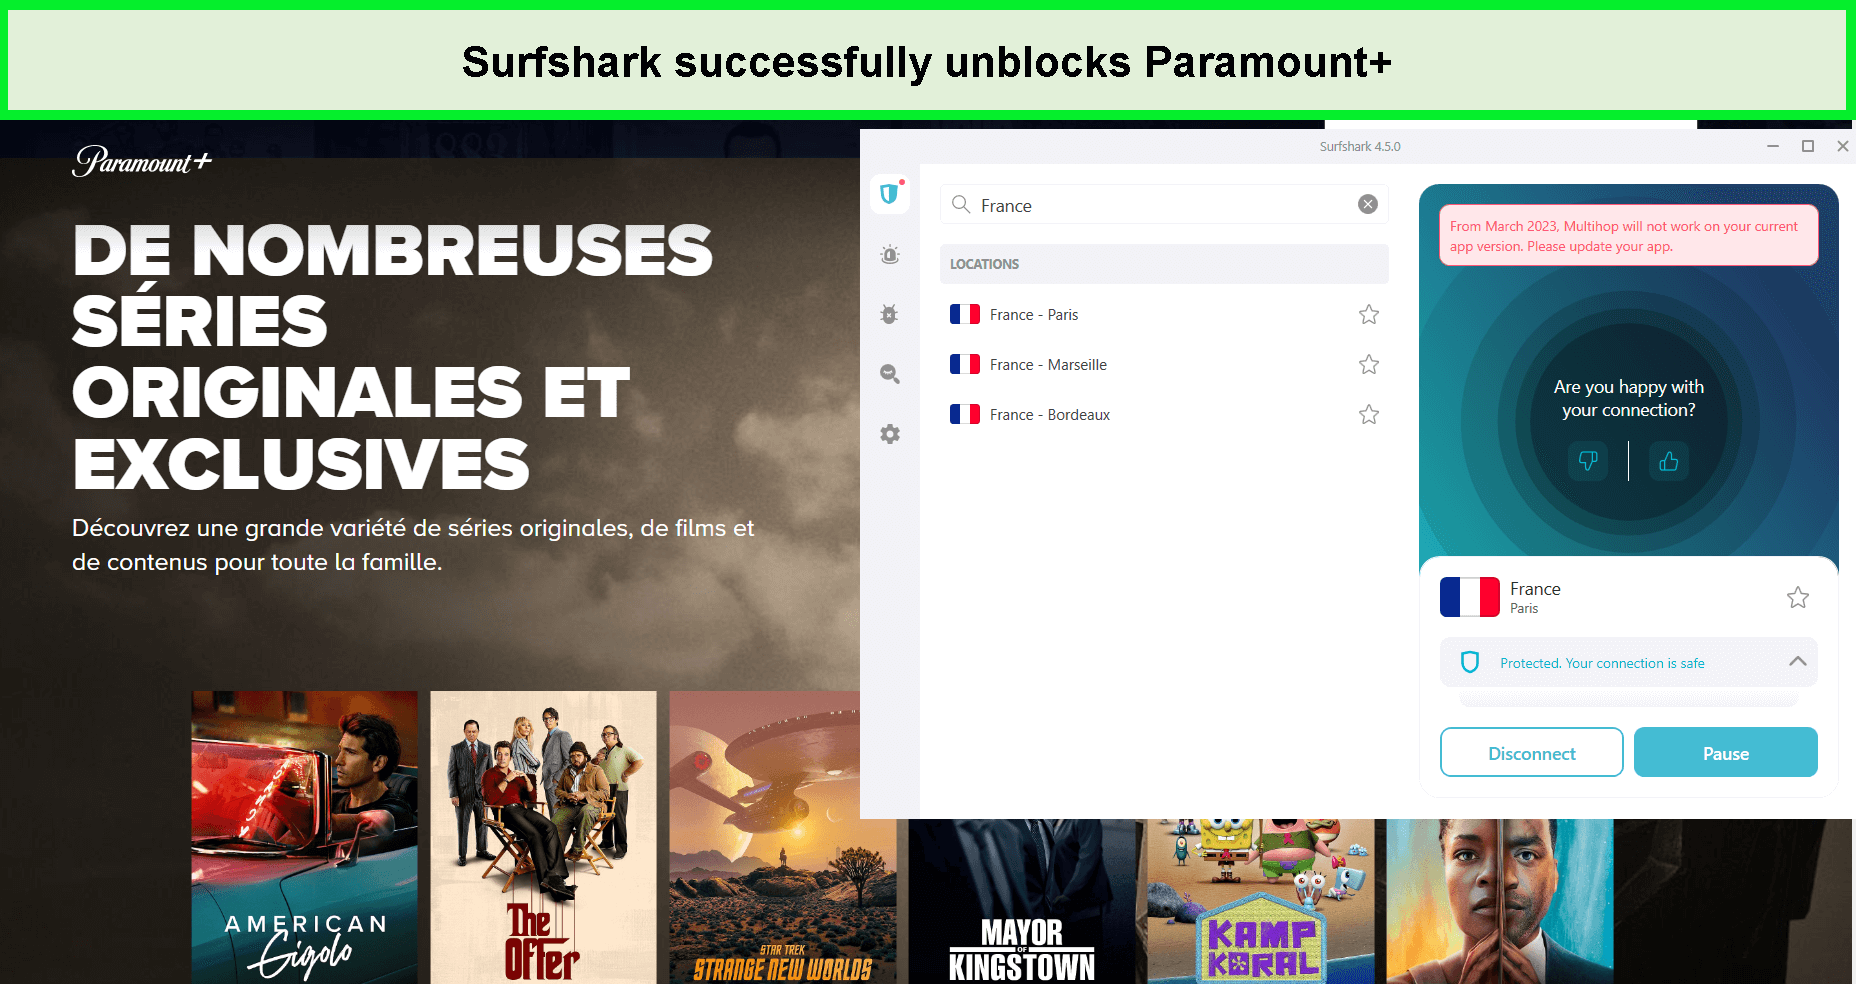 surfshark-unblock-paramount-plus-france